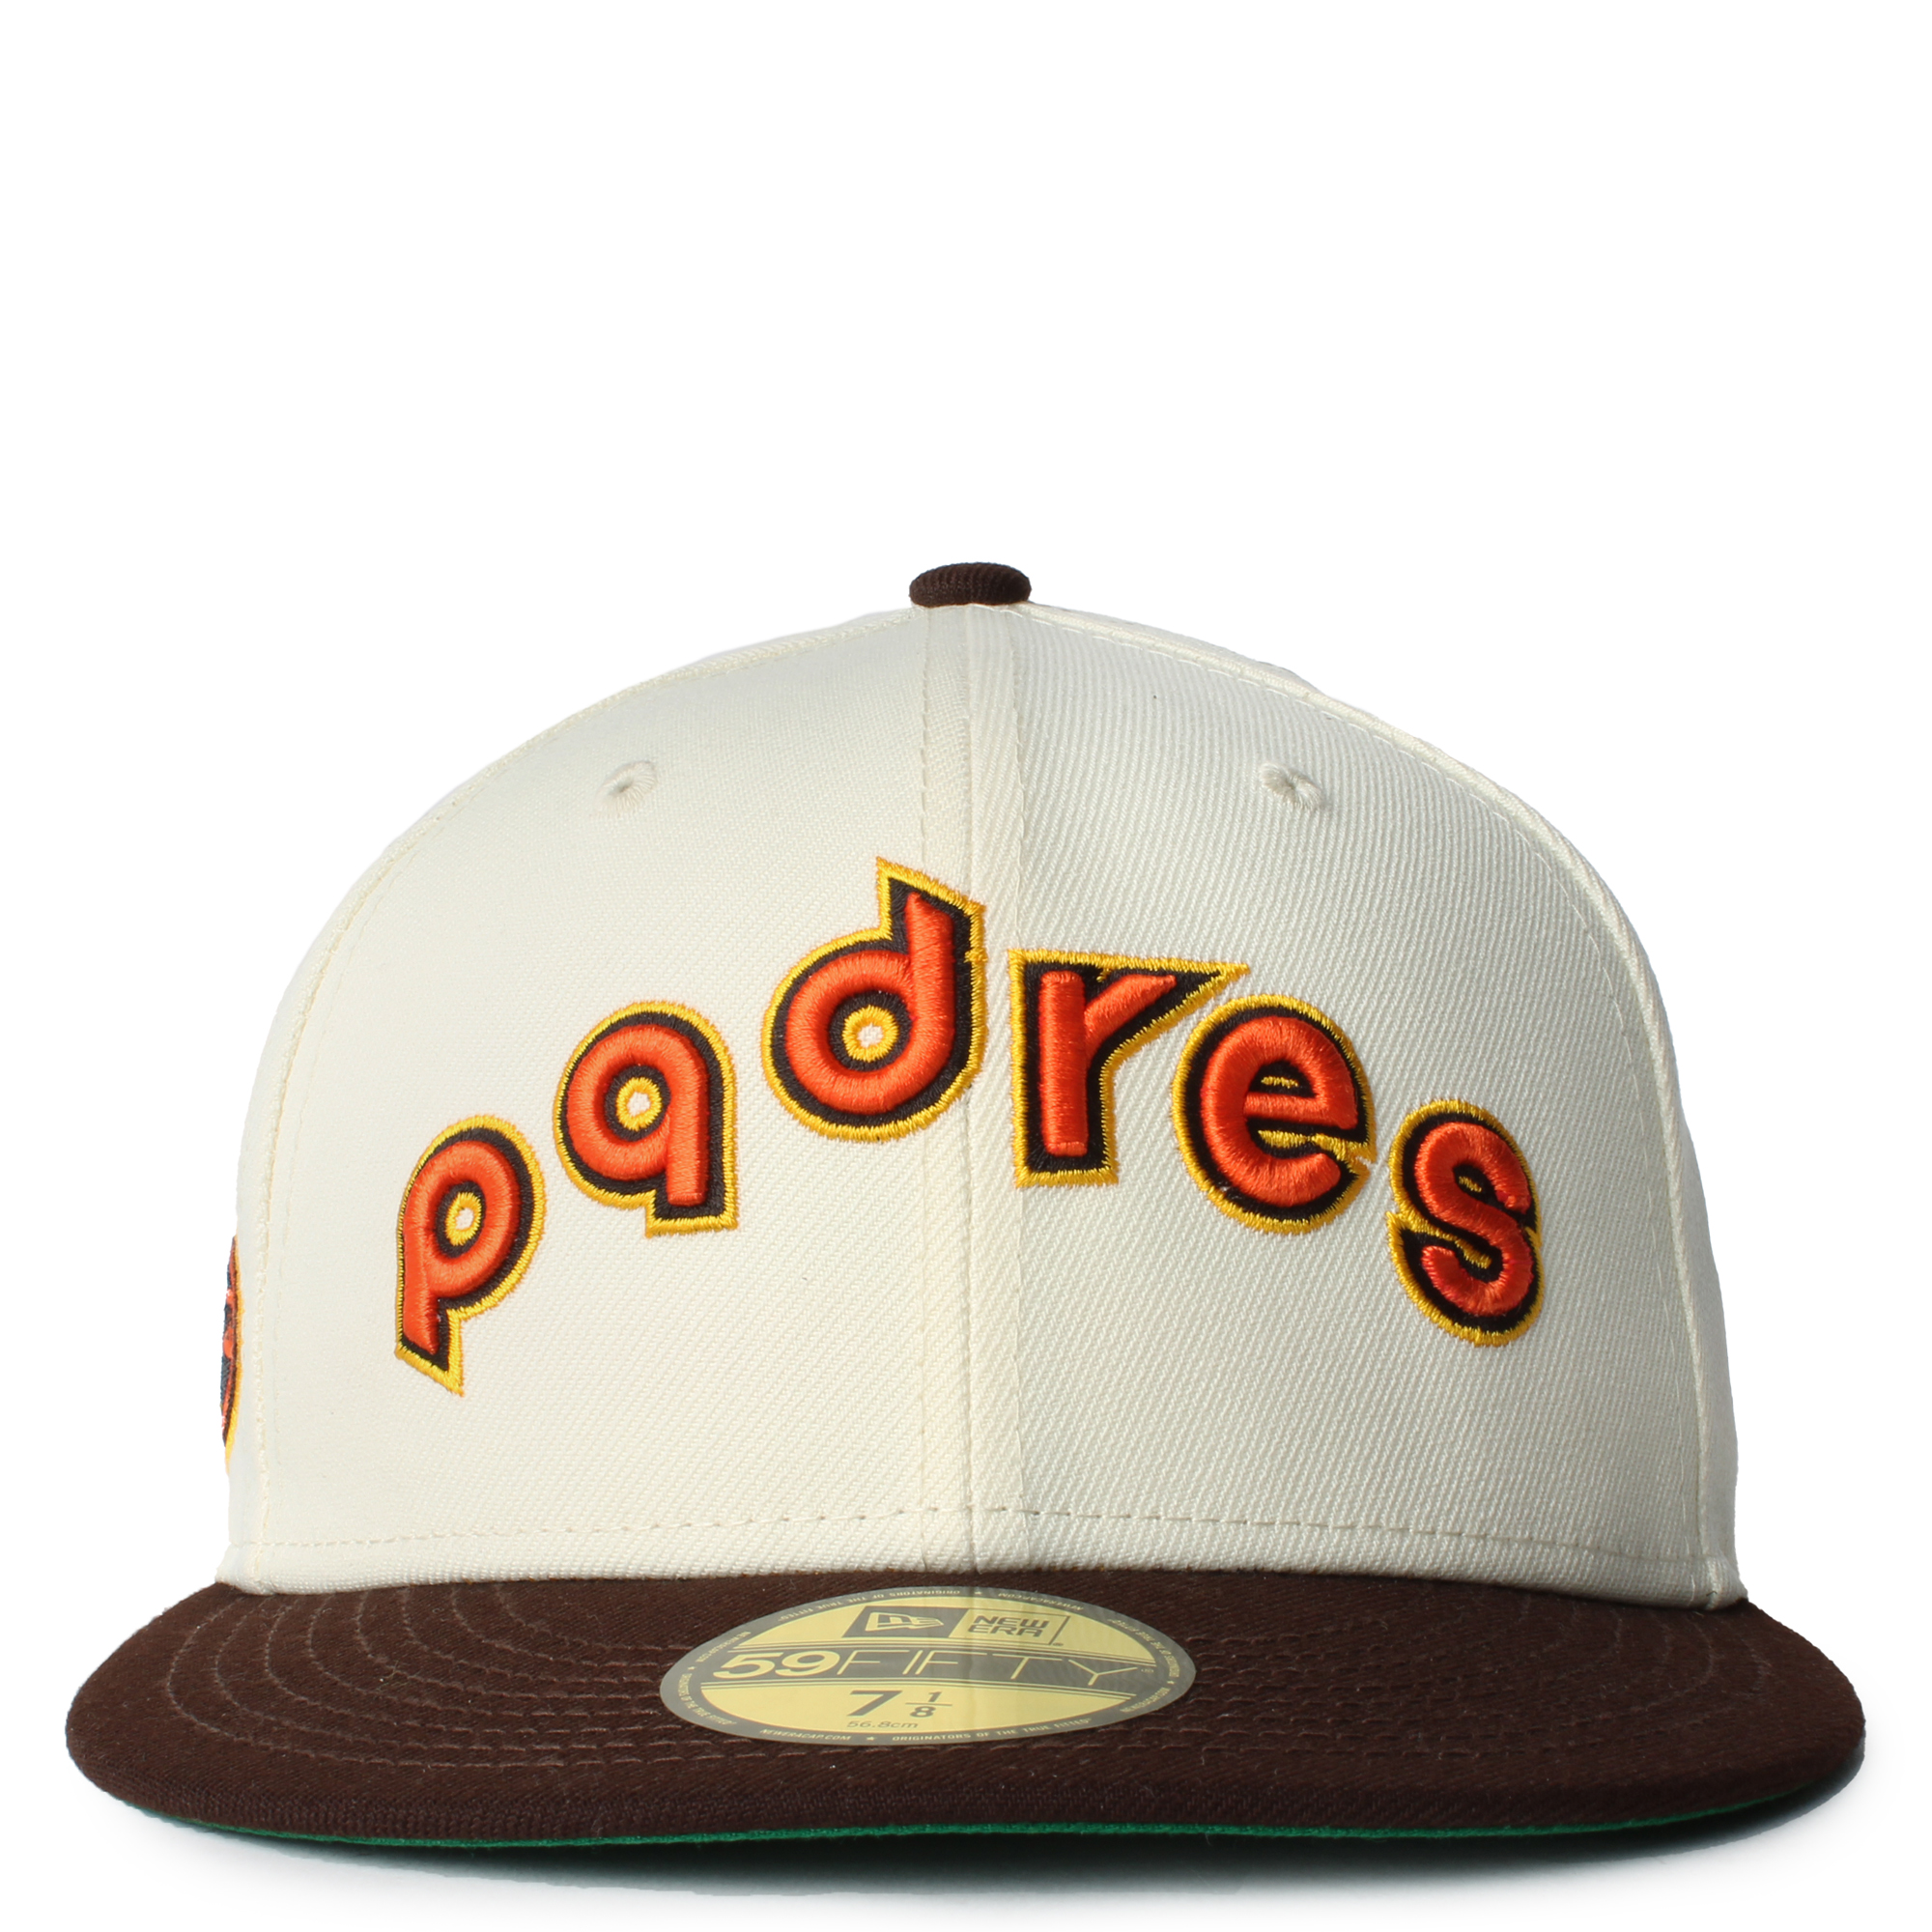 New Era San Diego Padres Trucker Hat